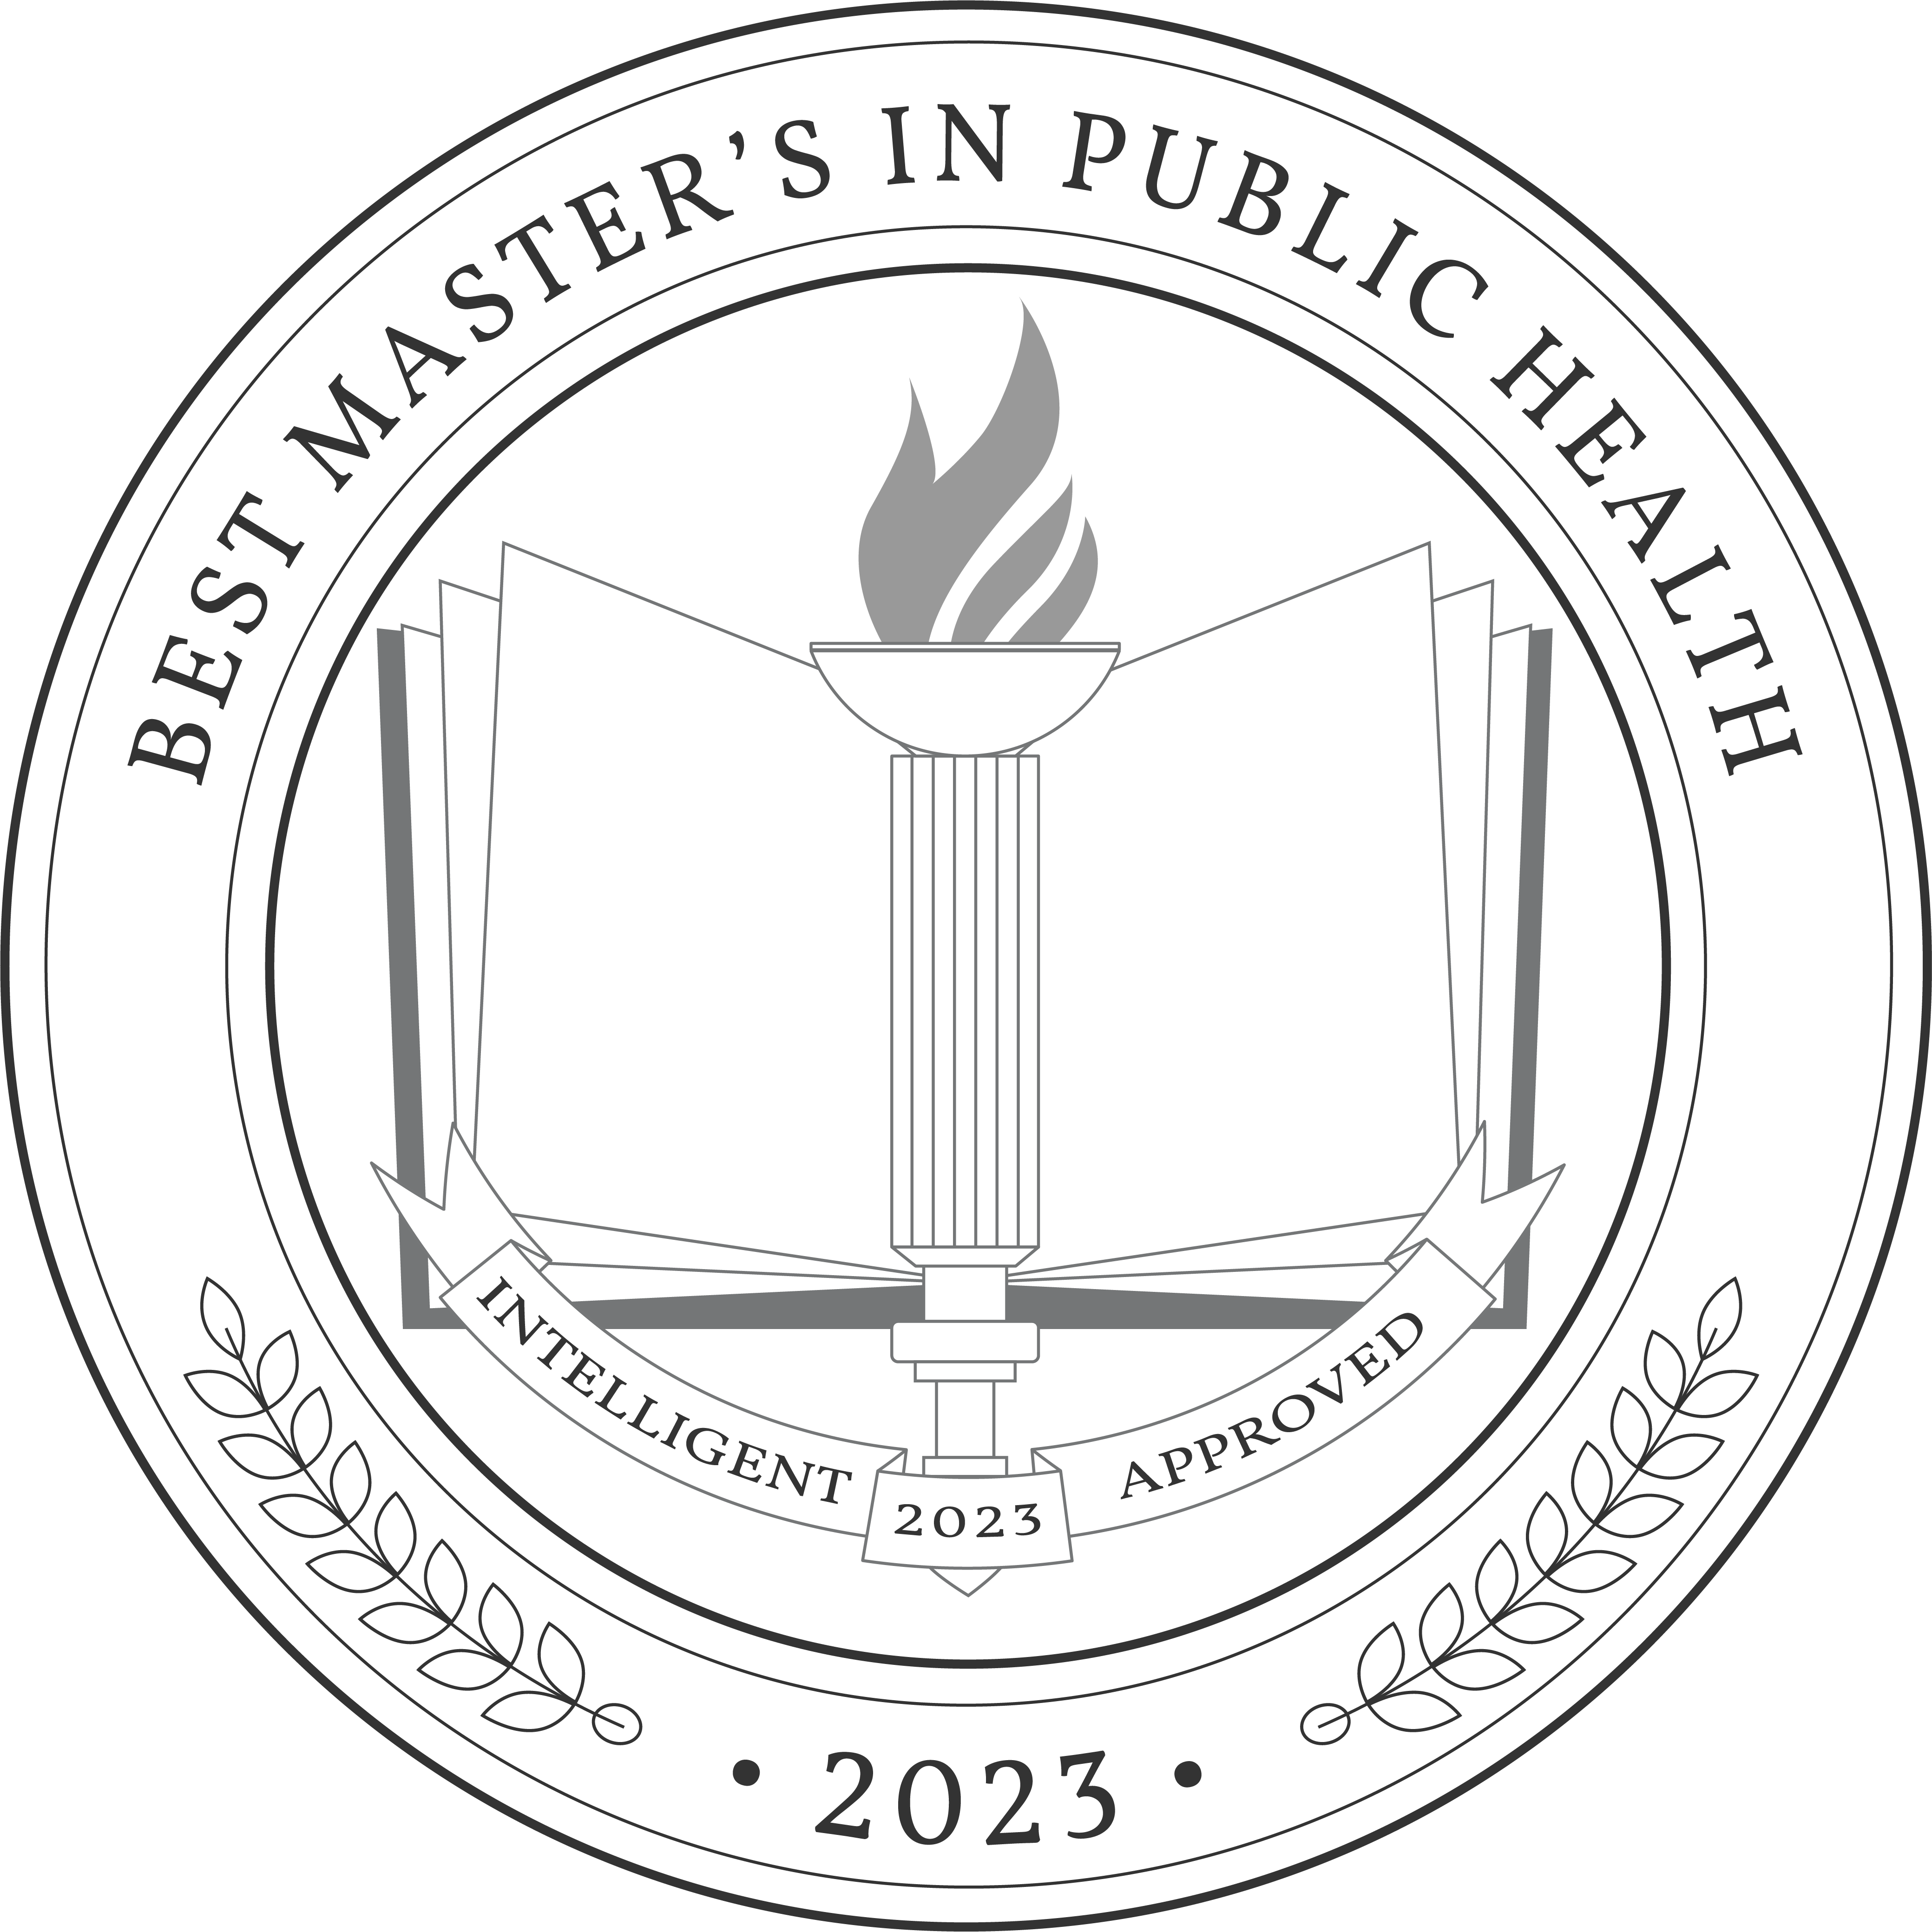 Best Master's in Public Health badge